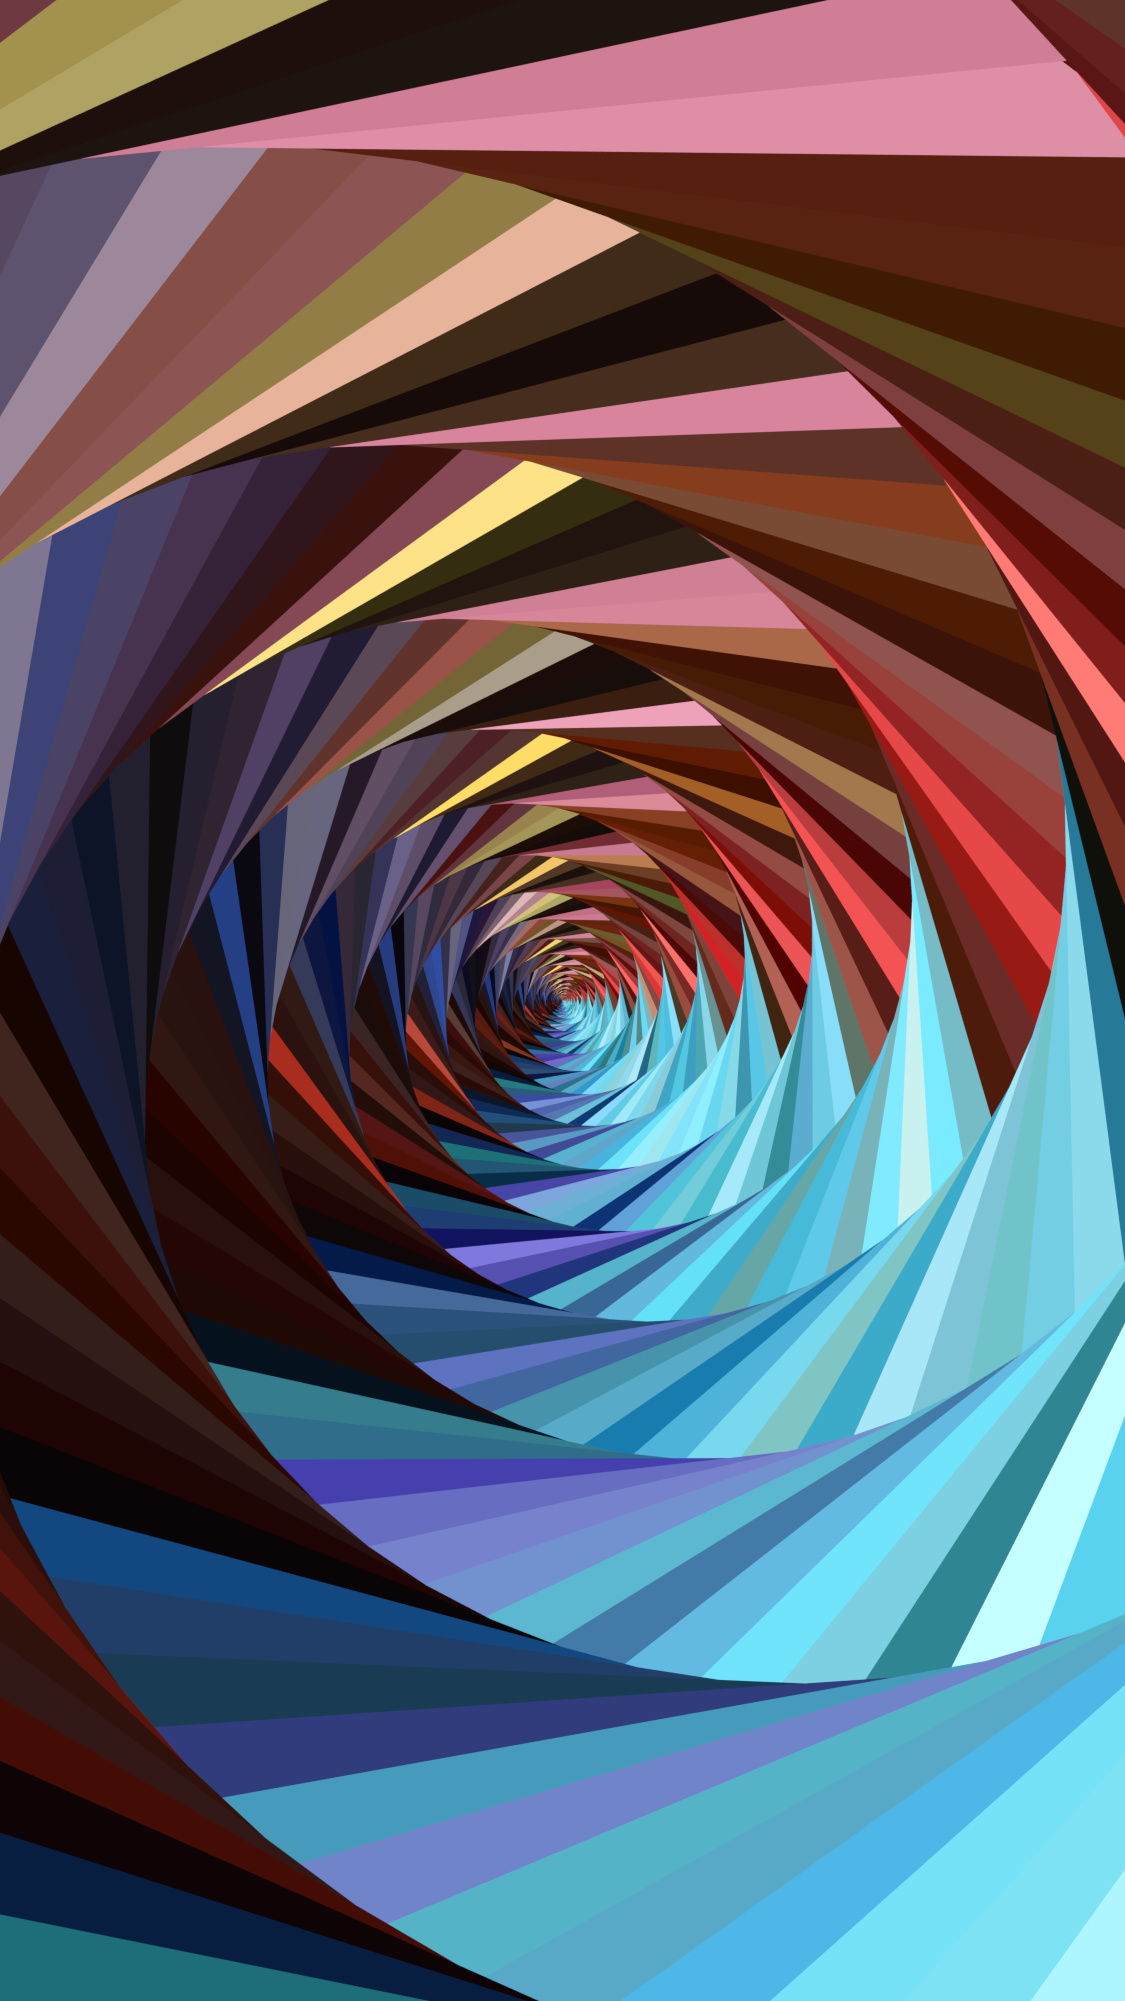 Golden Ratio: Fractals and spirals, Fractal art, Optic illusion, Colorful geometric spiral. 1130x2010 HD Wallpaper.